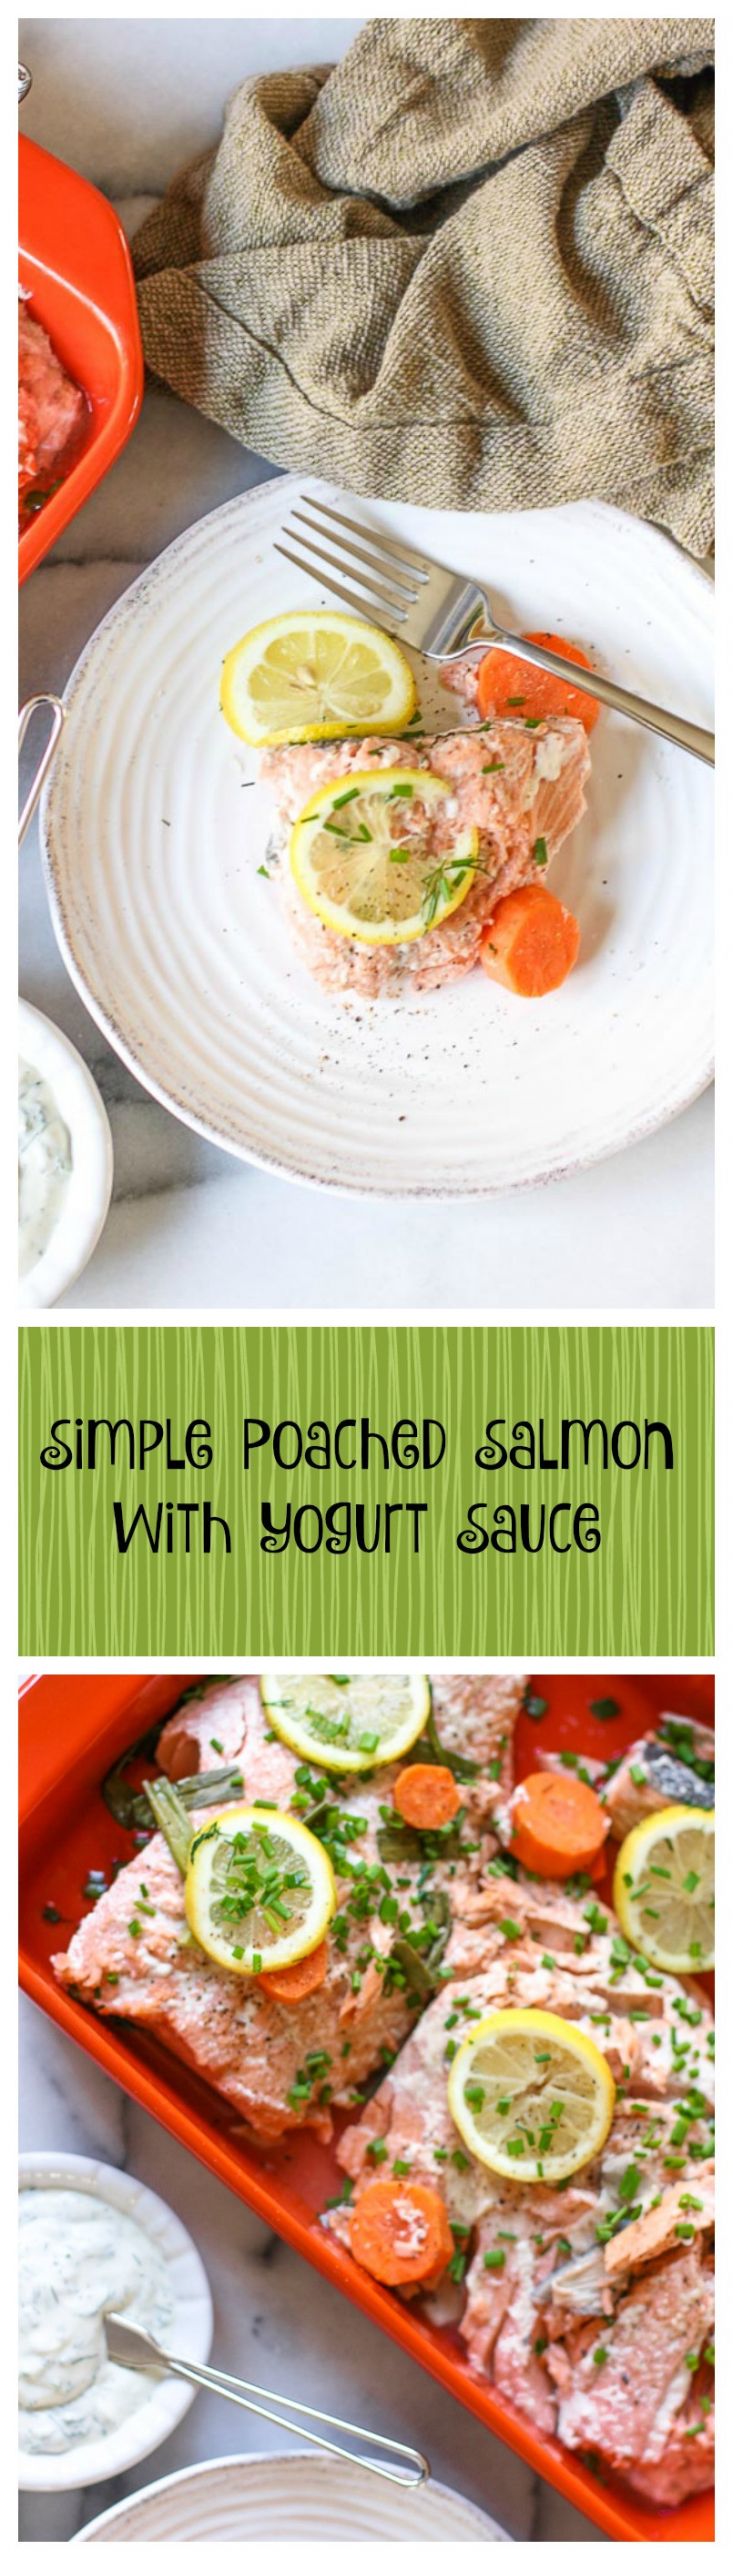 Yogurt Sauces For Fish
 Simple Poached Salmon with Yogurt Sauce Recipe